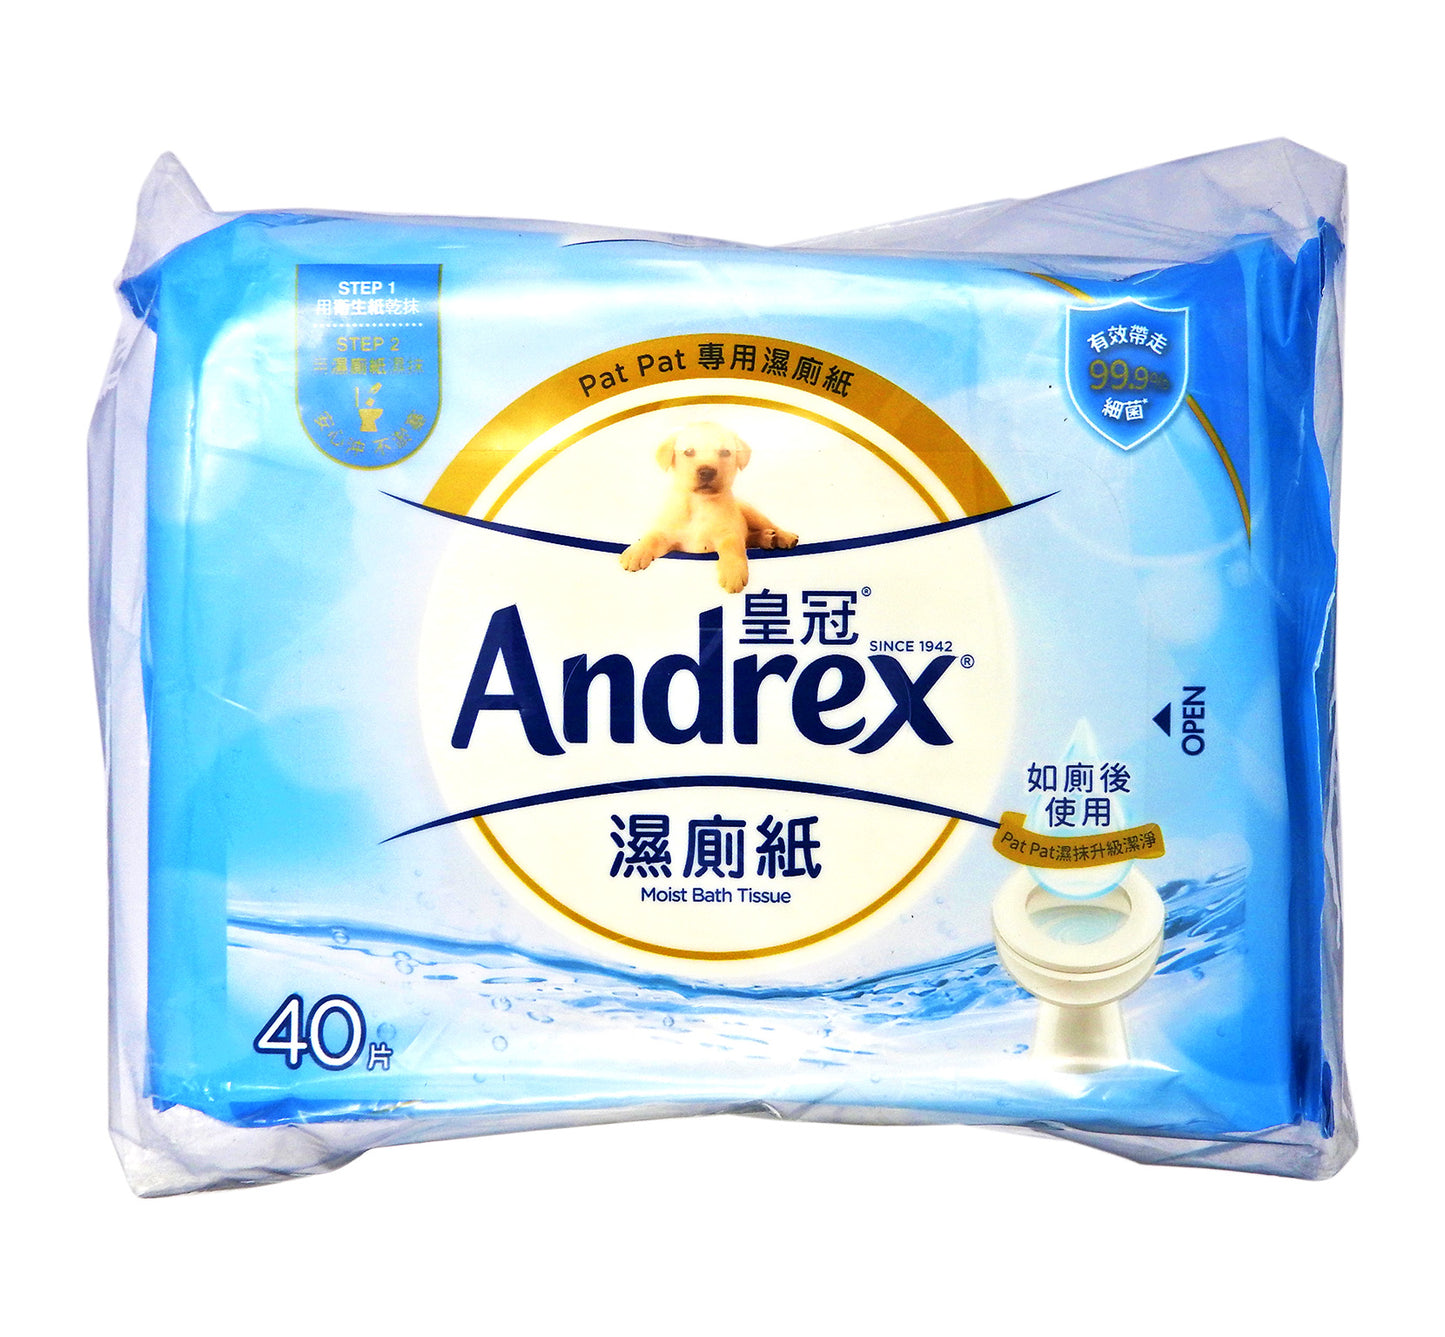 Andrex - 升級濕廁紙 [40片x 3包] #30933 (新舊包裝隨機發貨)